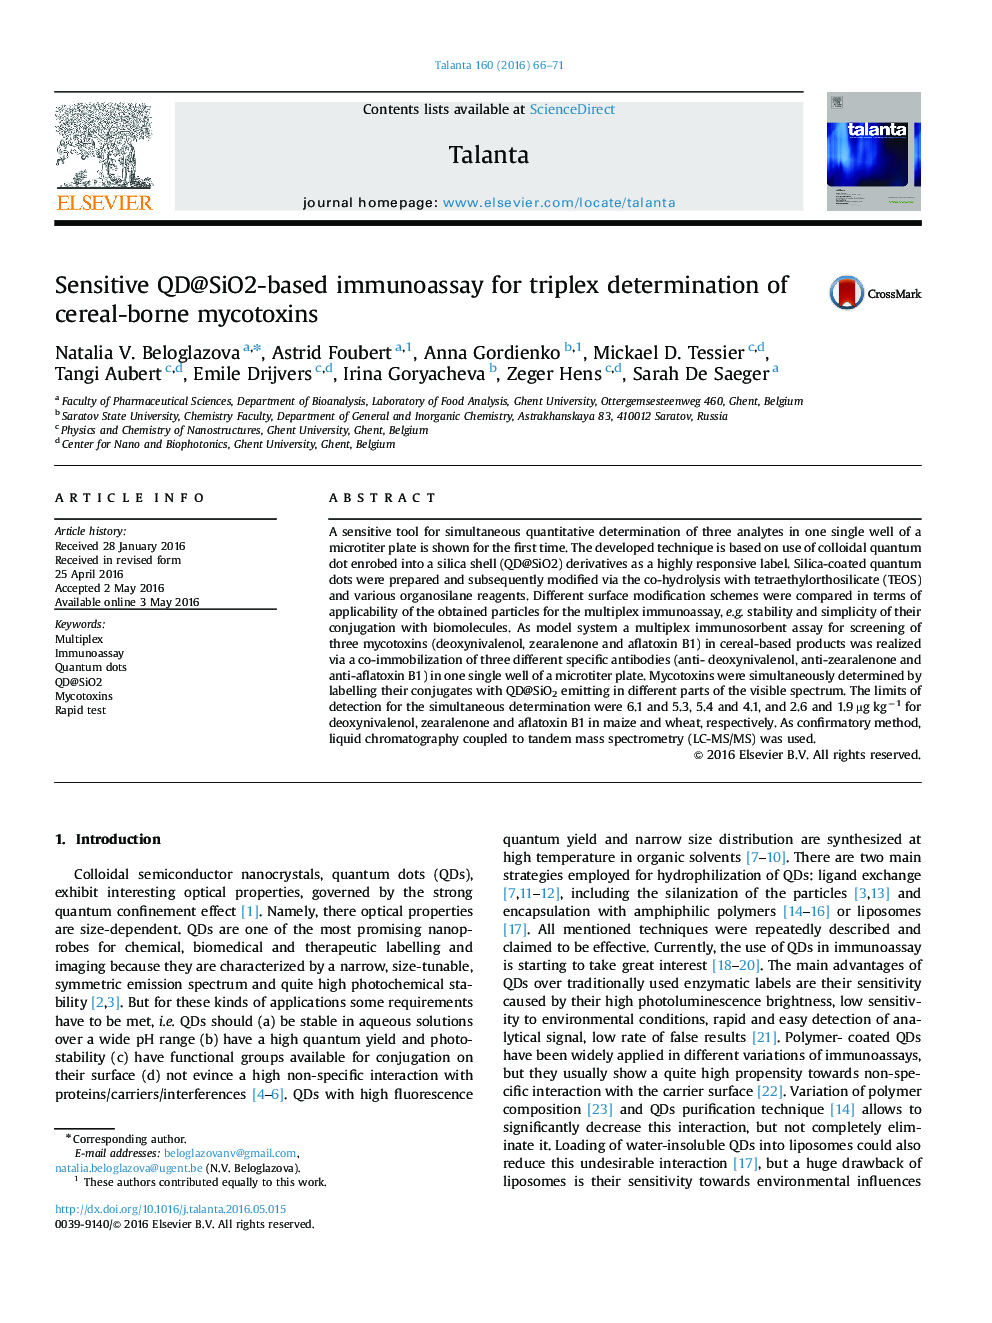 Sensitive QD@SiO2-based immunoassay for triplex determination of cereal-borne mycotoxins